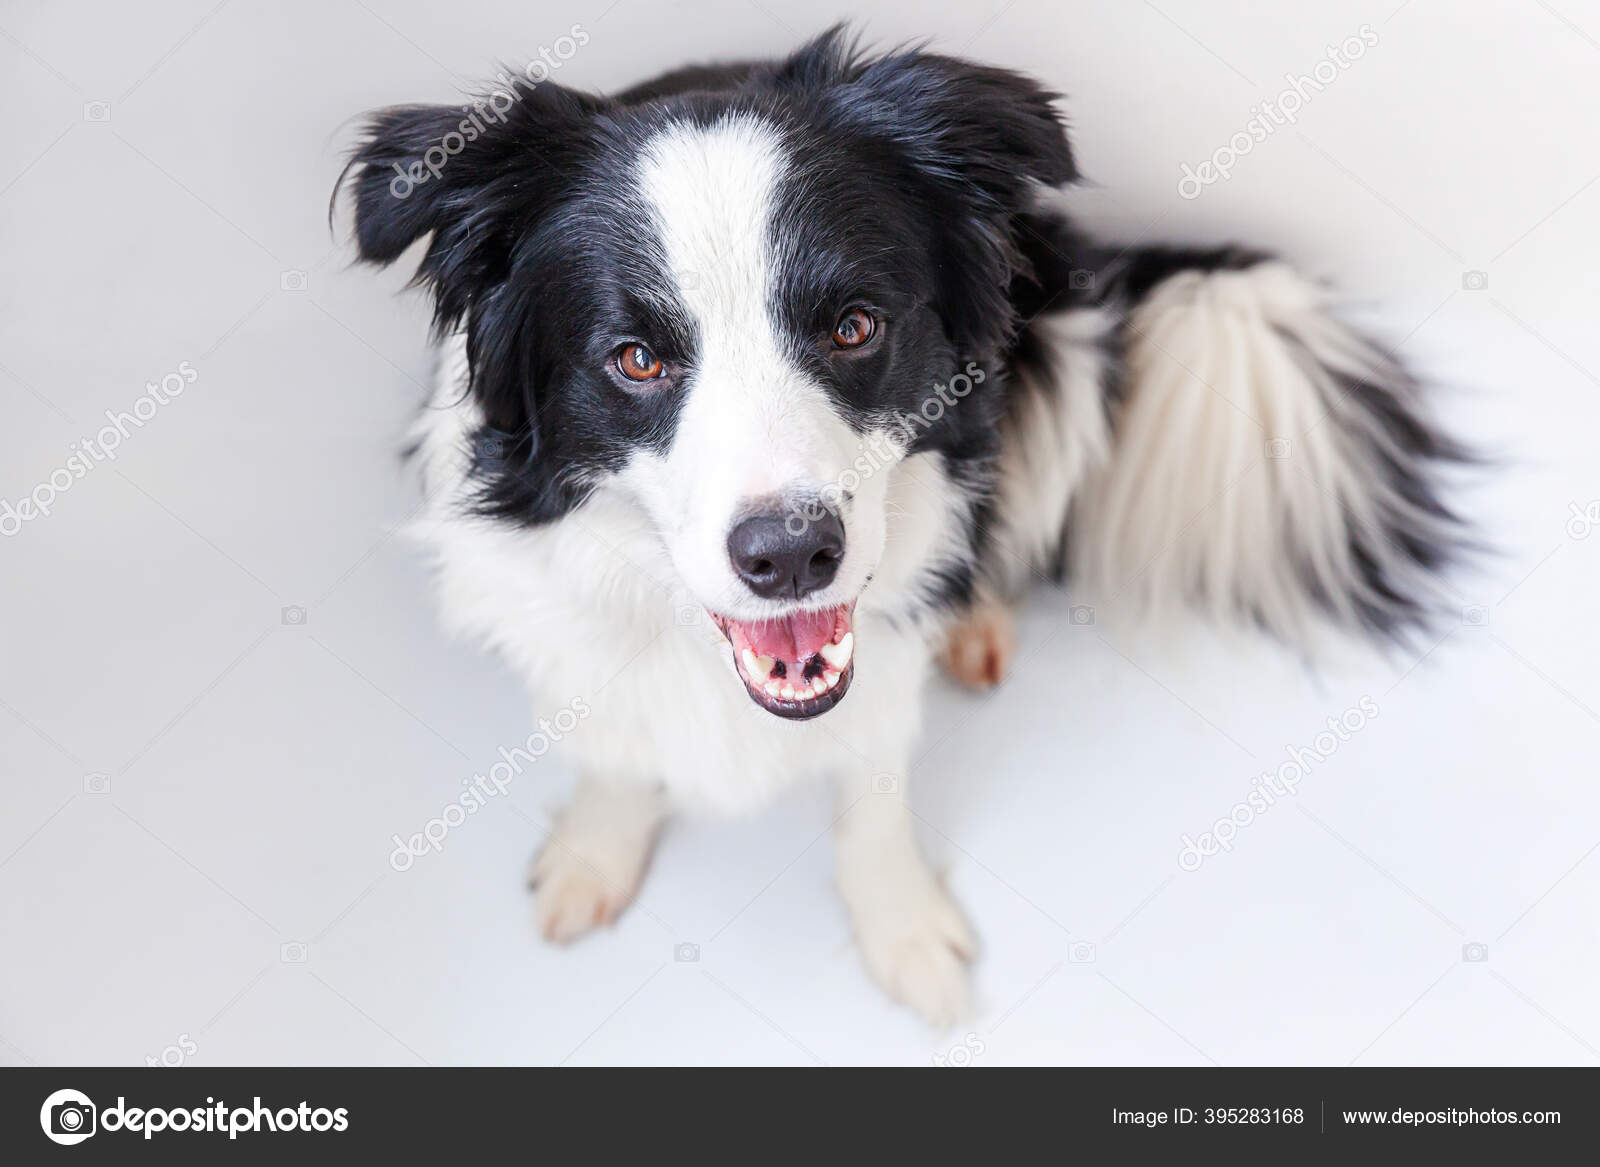 Funny studio portrait of cute smiling puppy dog border collie